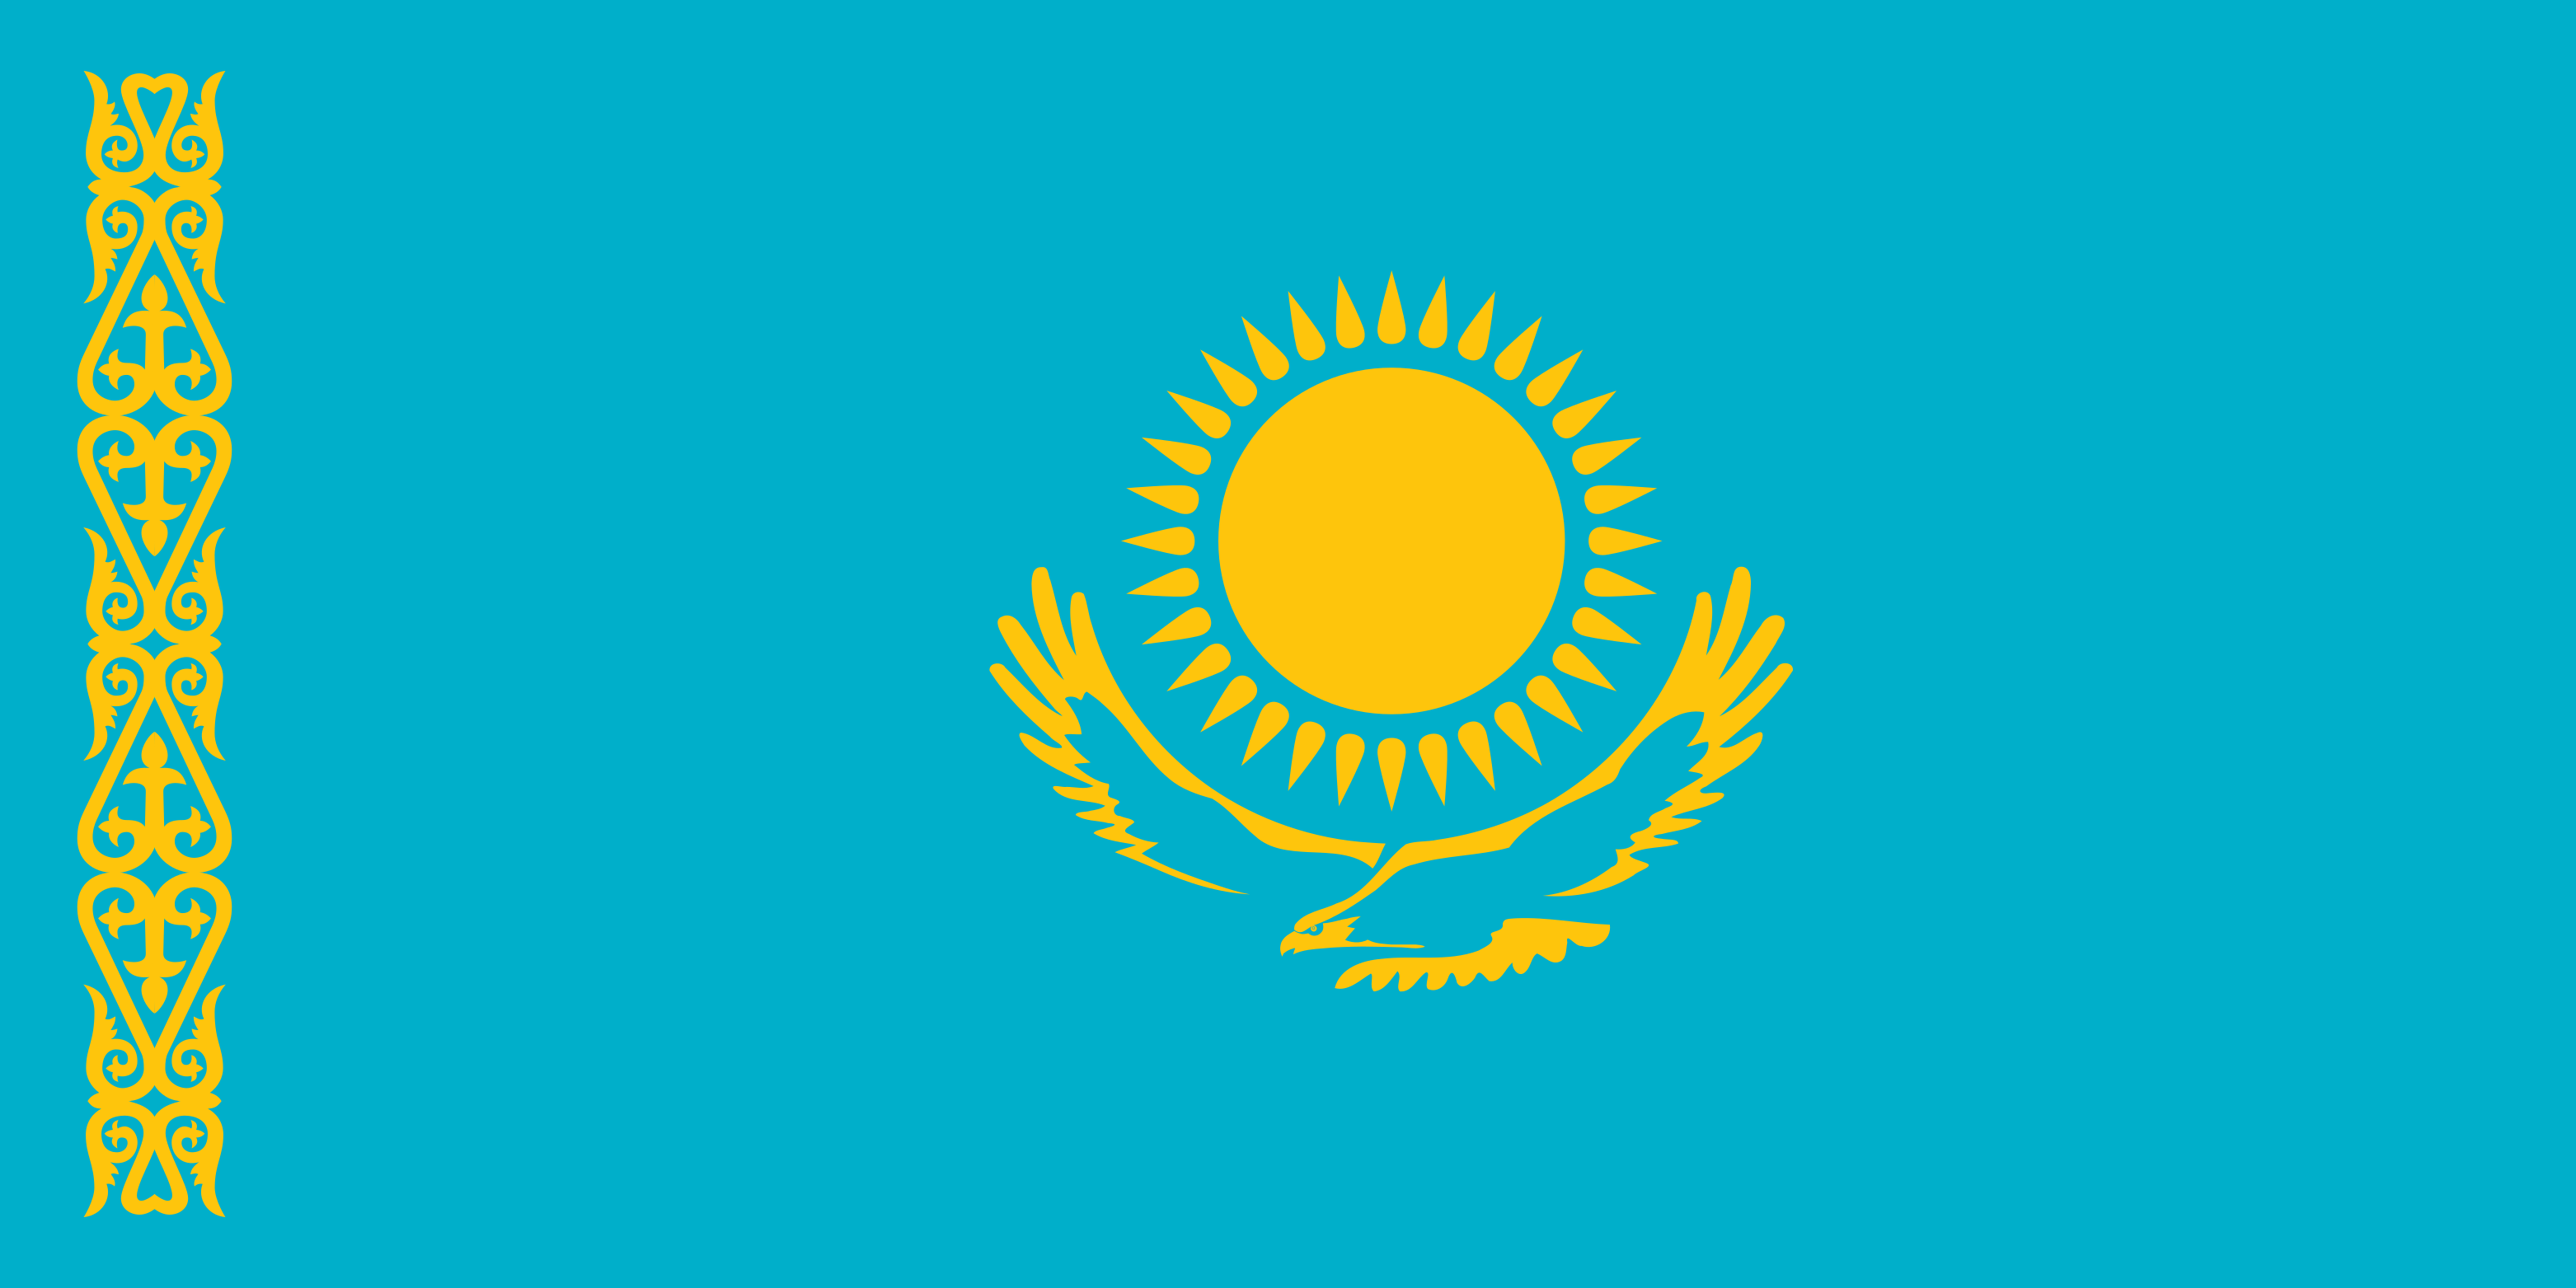 Free Kazakhstan Flag Documents: PDF, DOC, DOCX, HTML & More!